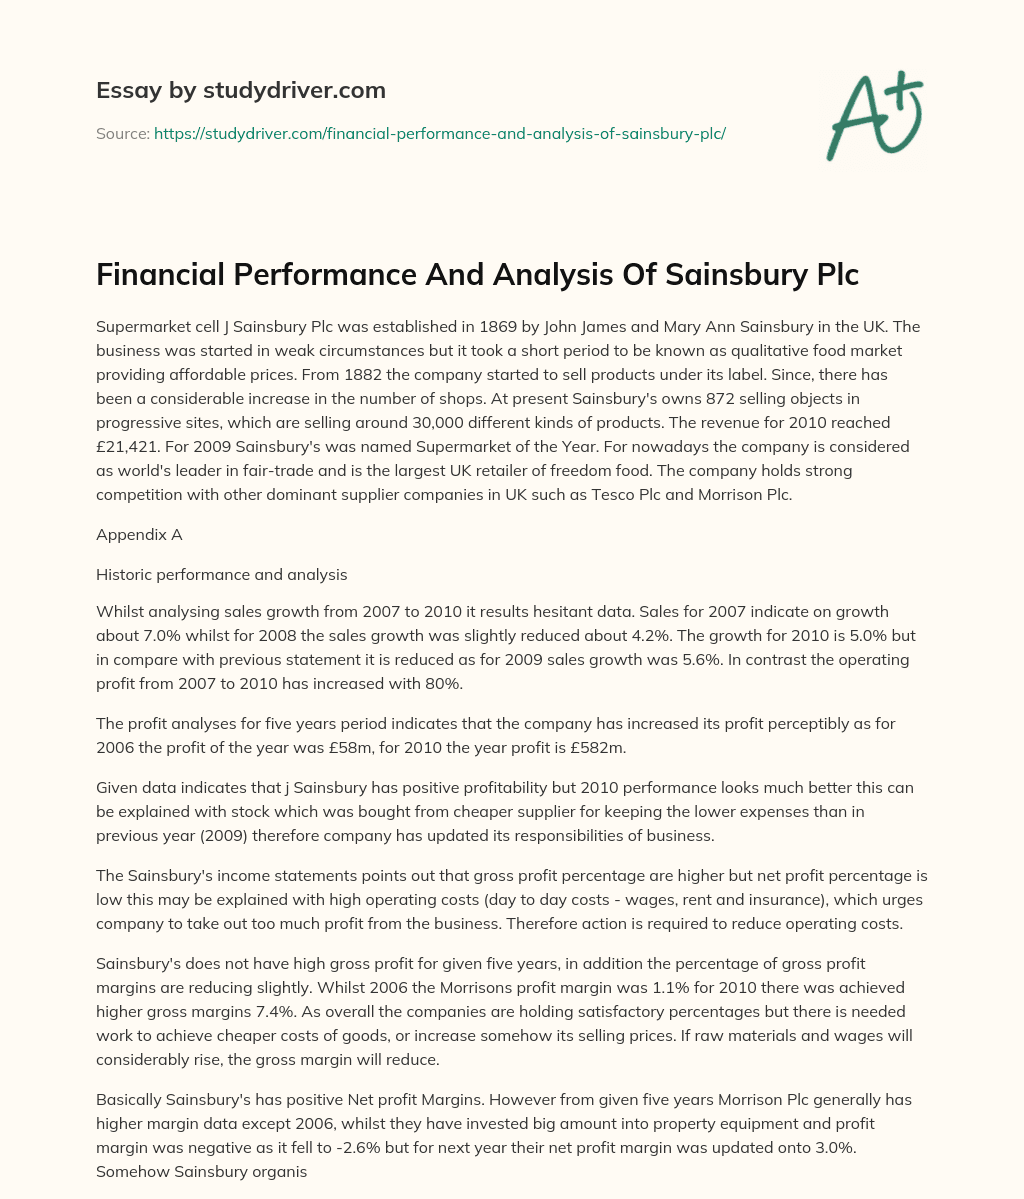 Financial Performance and Analysis of Sainsbury Plc essay